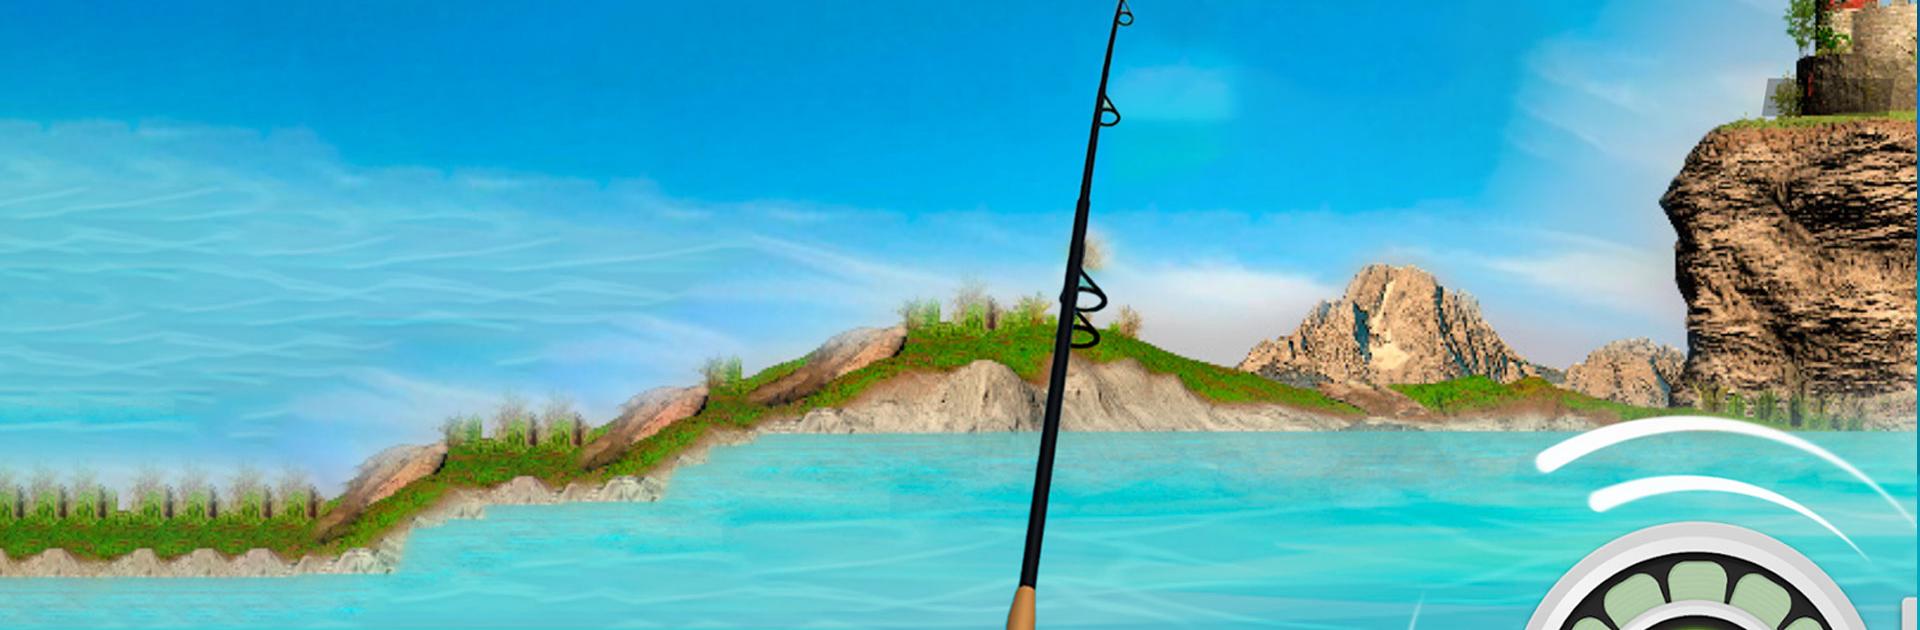 Grand Fishing Game: fish hook